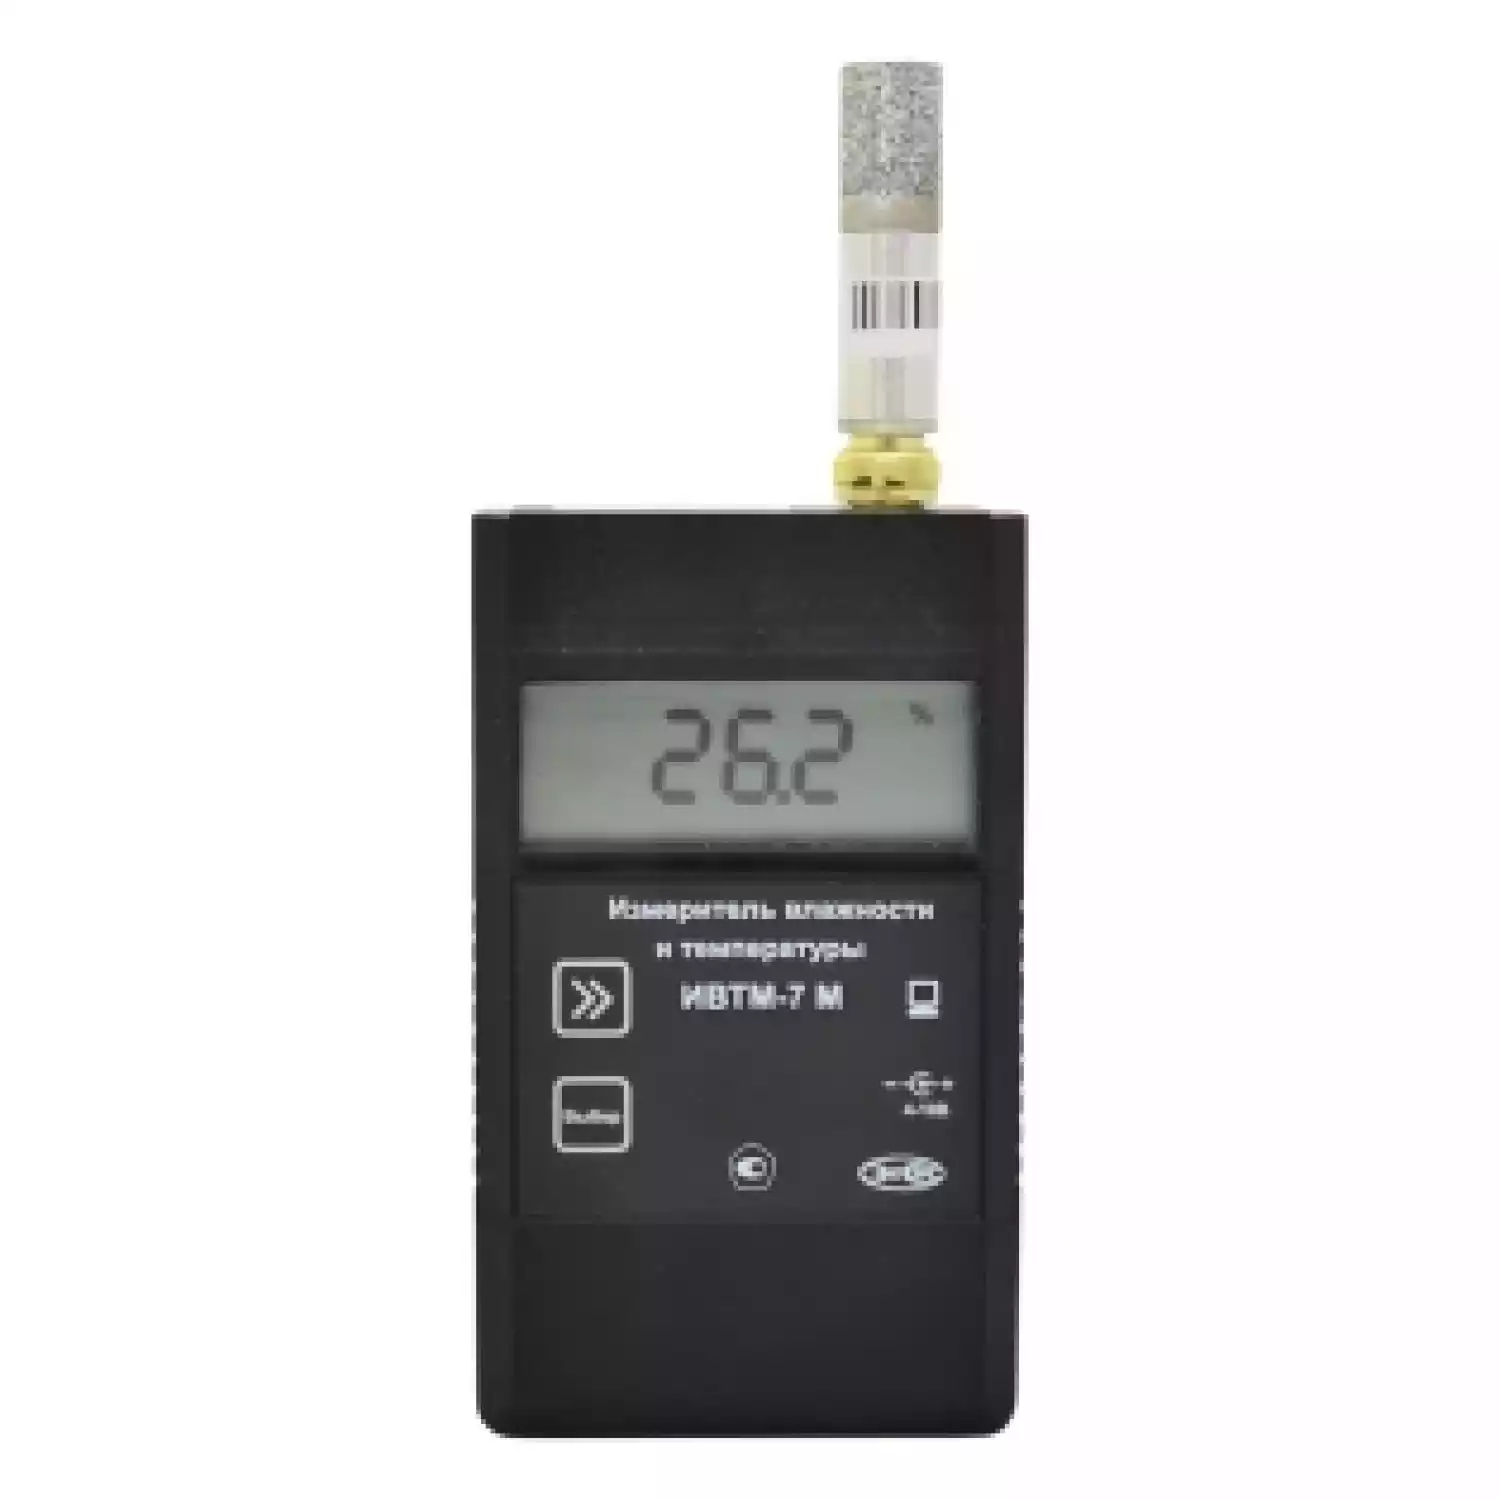 Термогигрометр ИВТМ-7 М 5-Д - 1